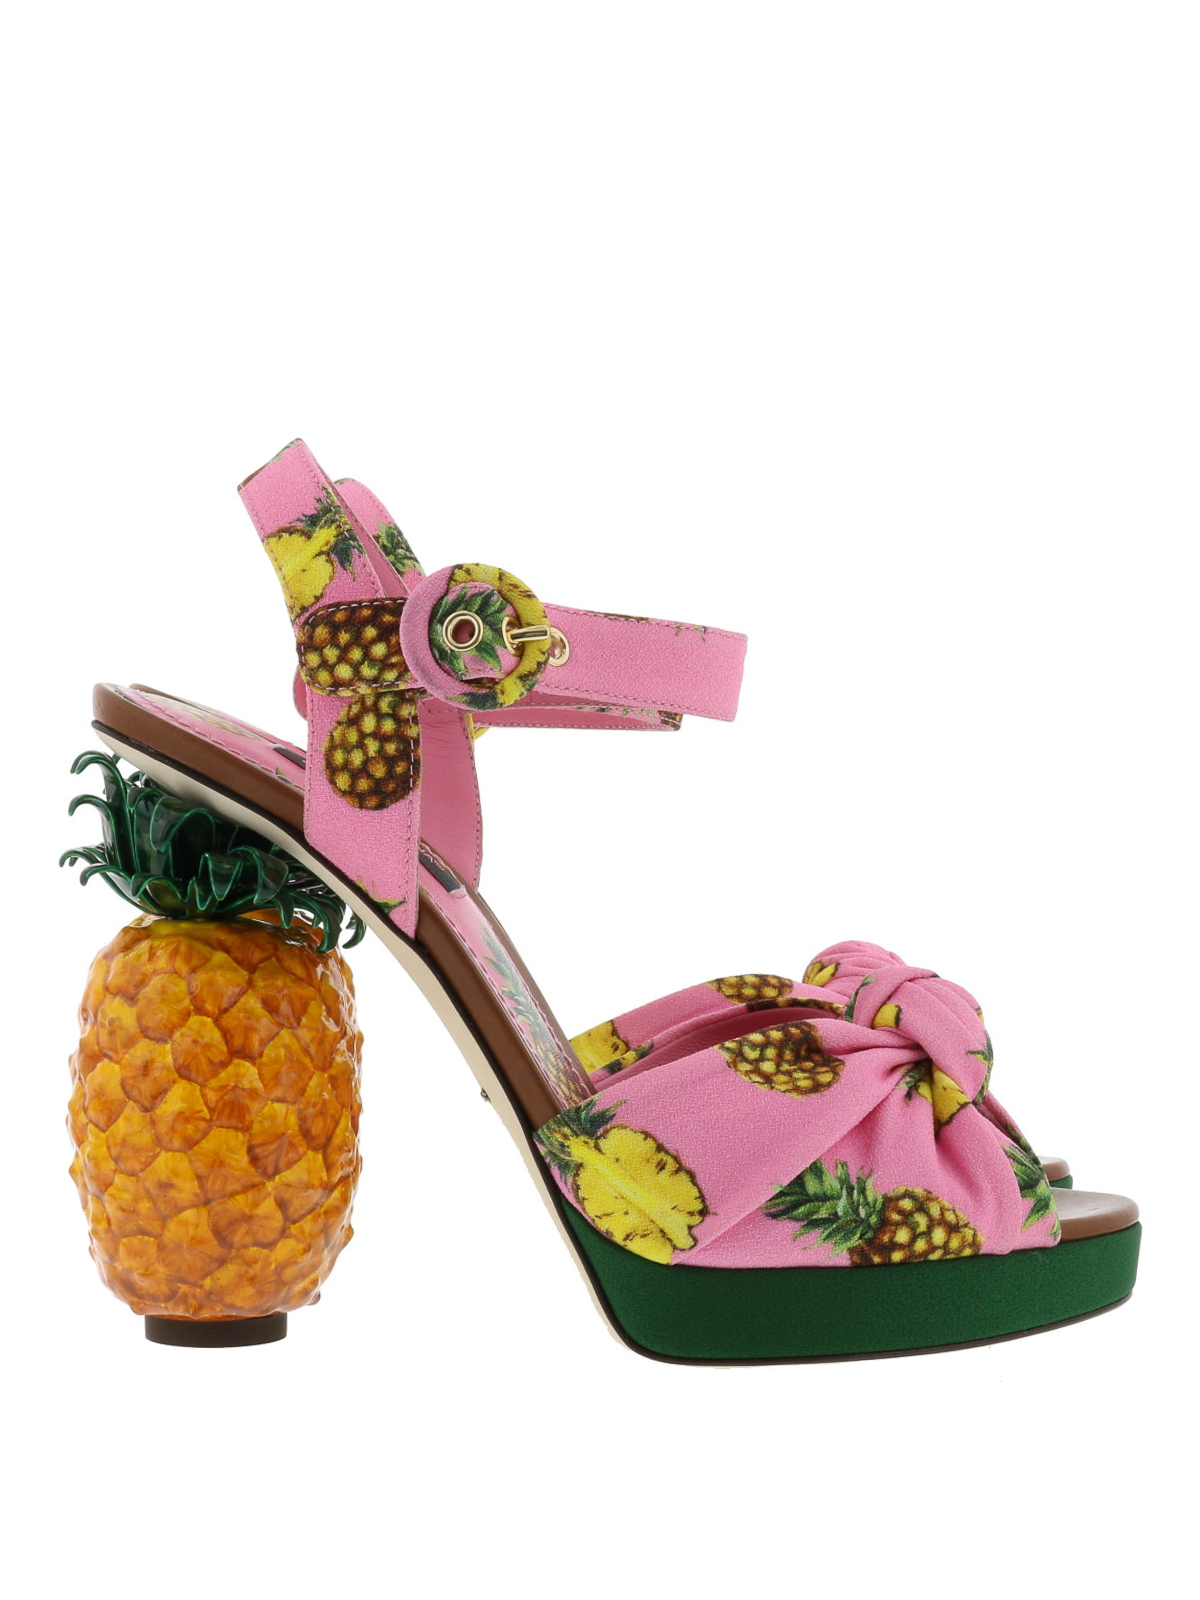 Arriba 77+ imagen dolce gabbana pineapple shoes